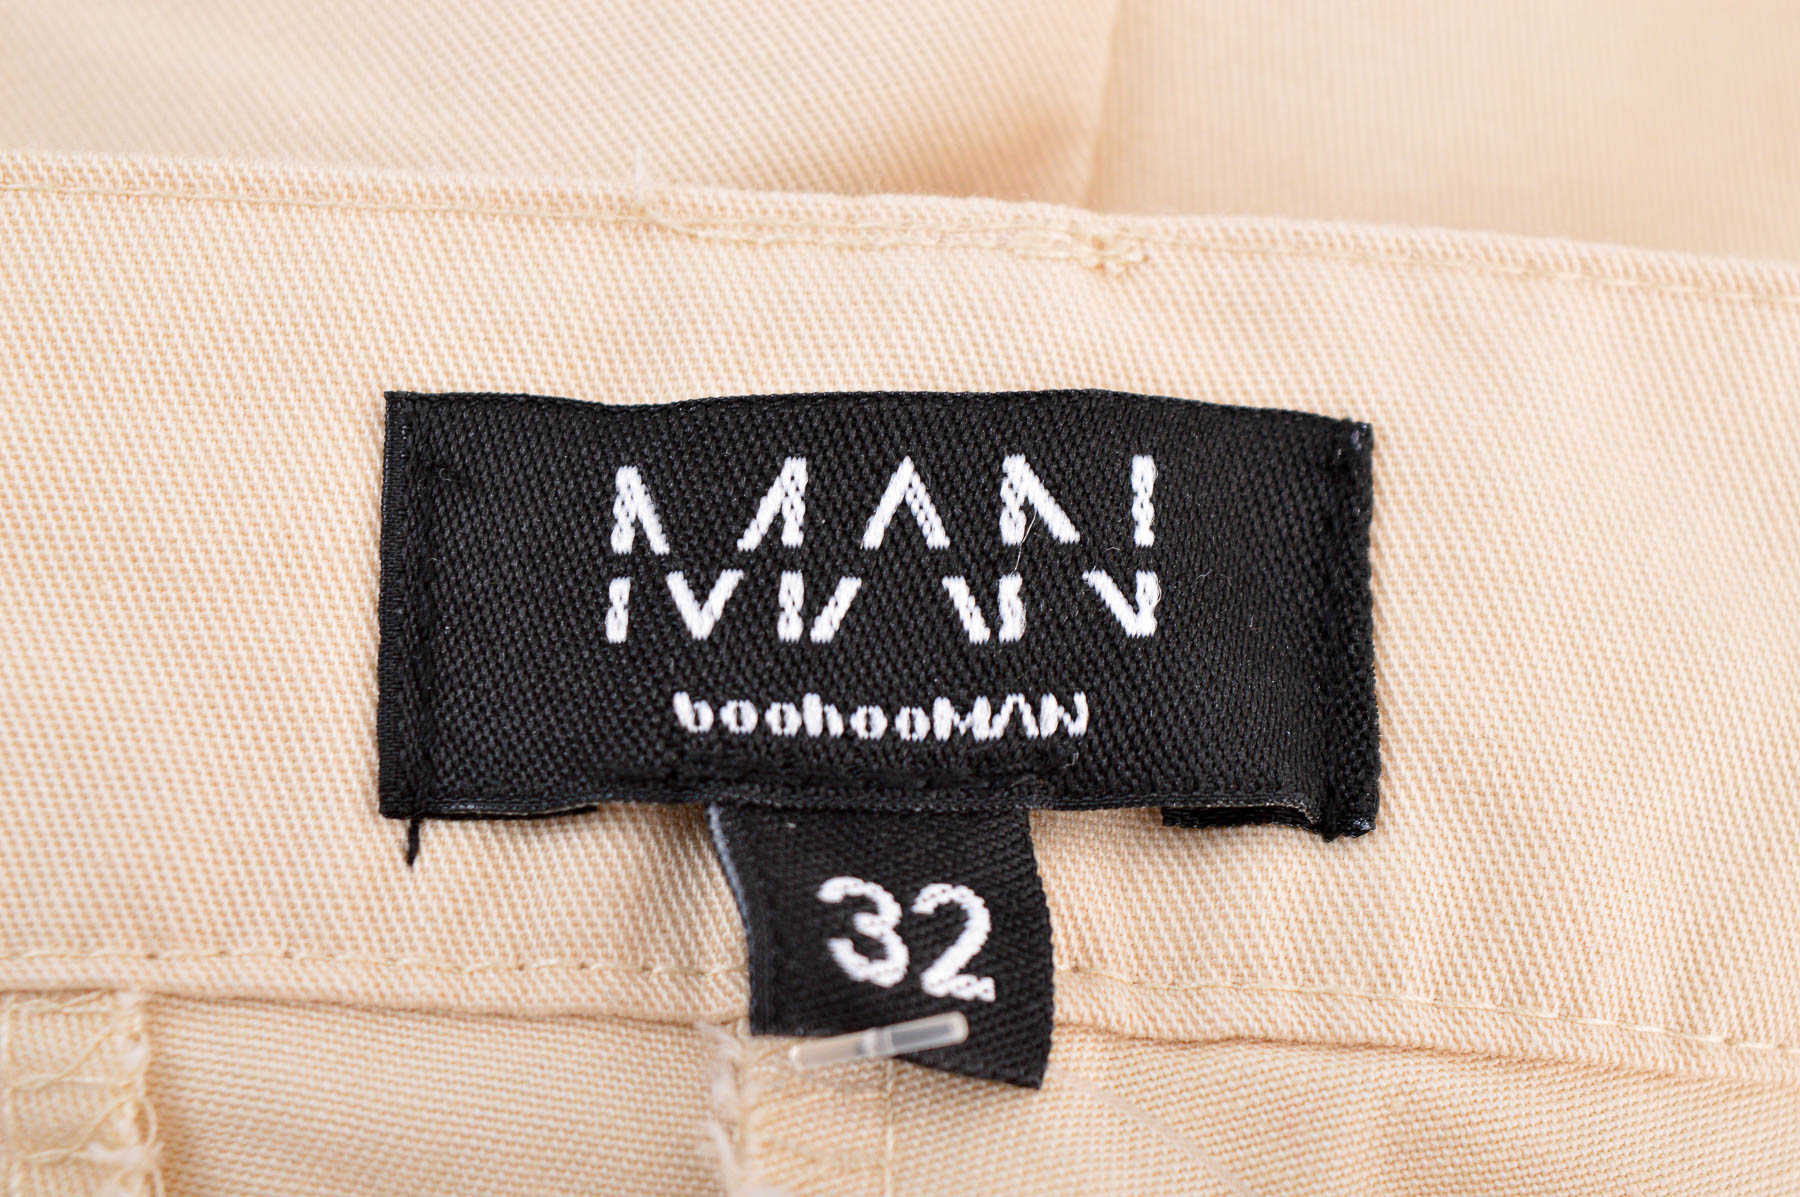 Men's trousers - Boohoo MAN - 2